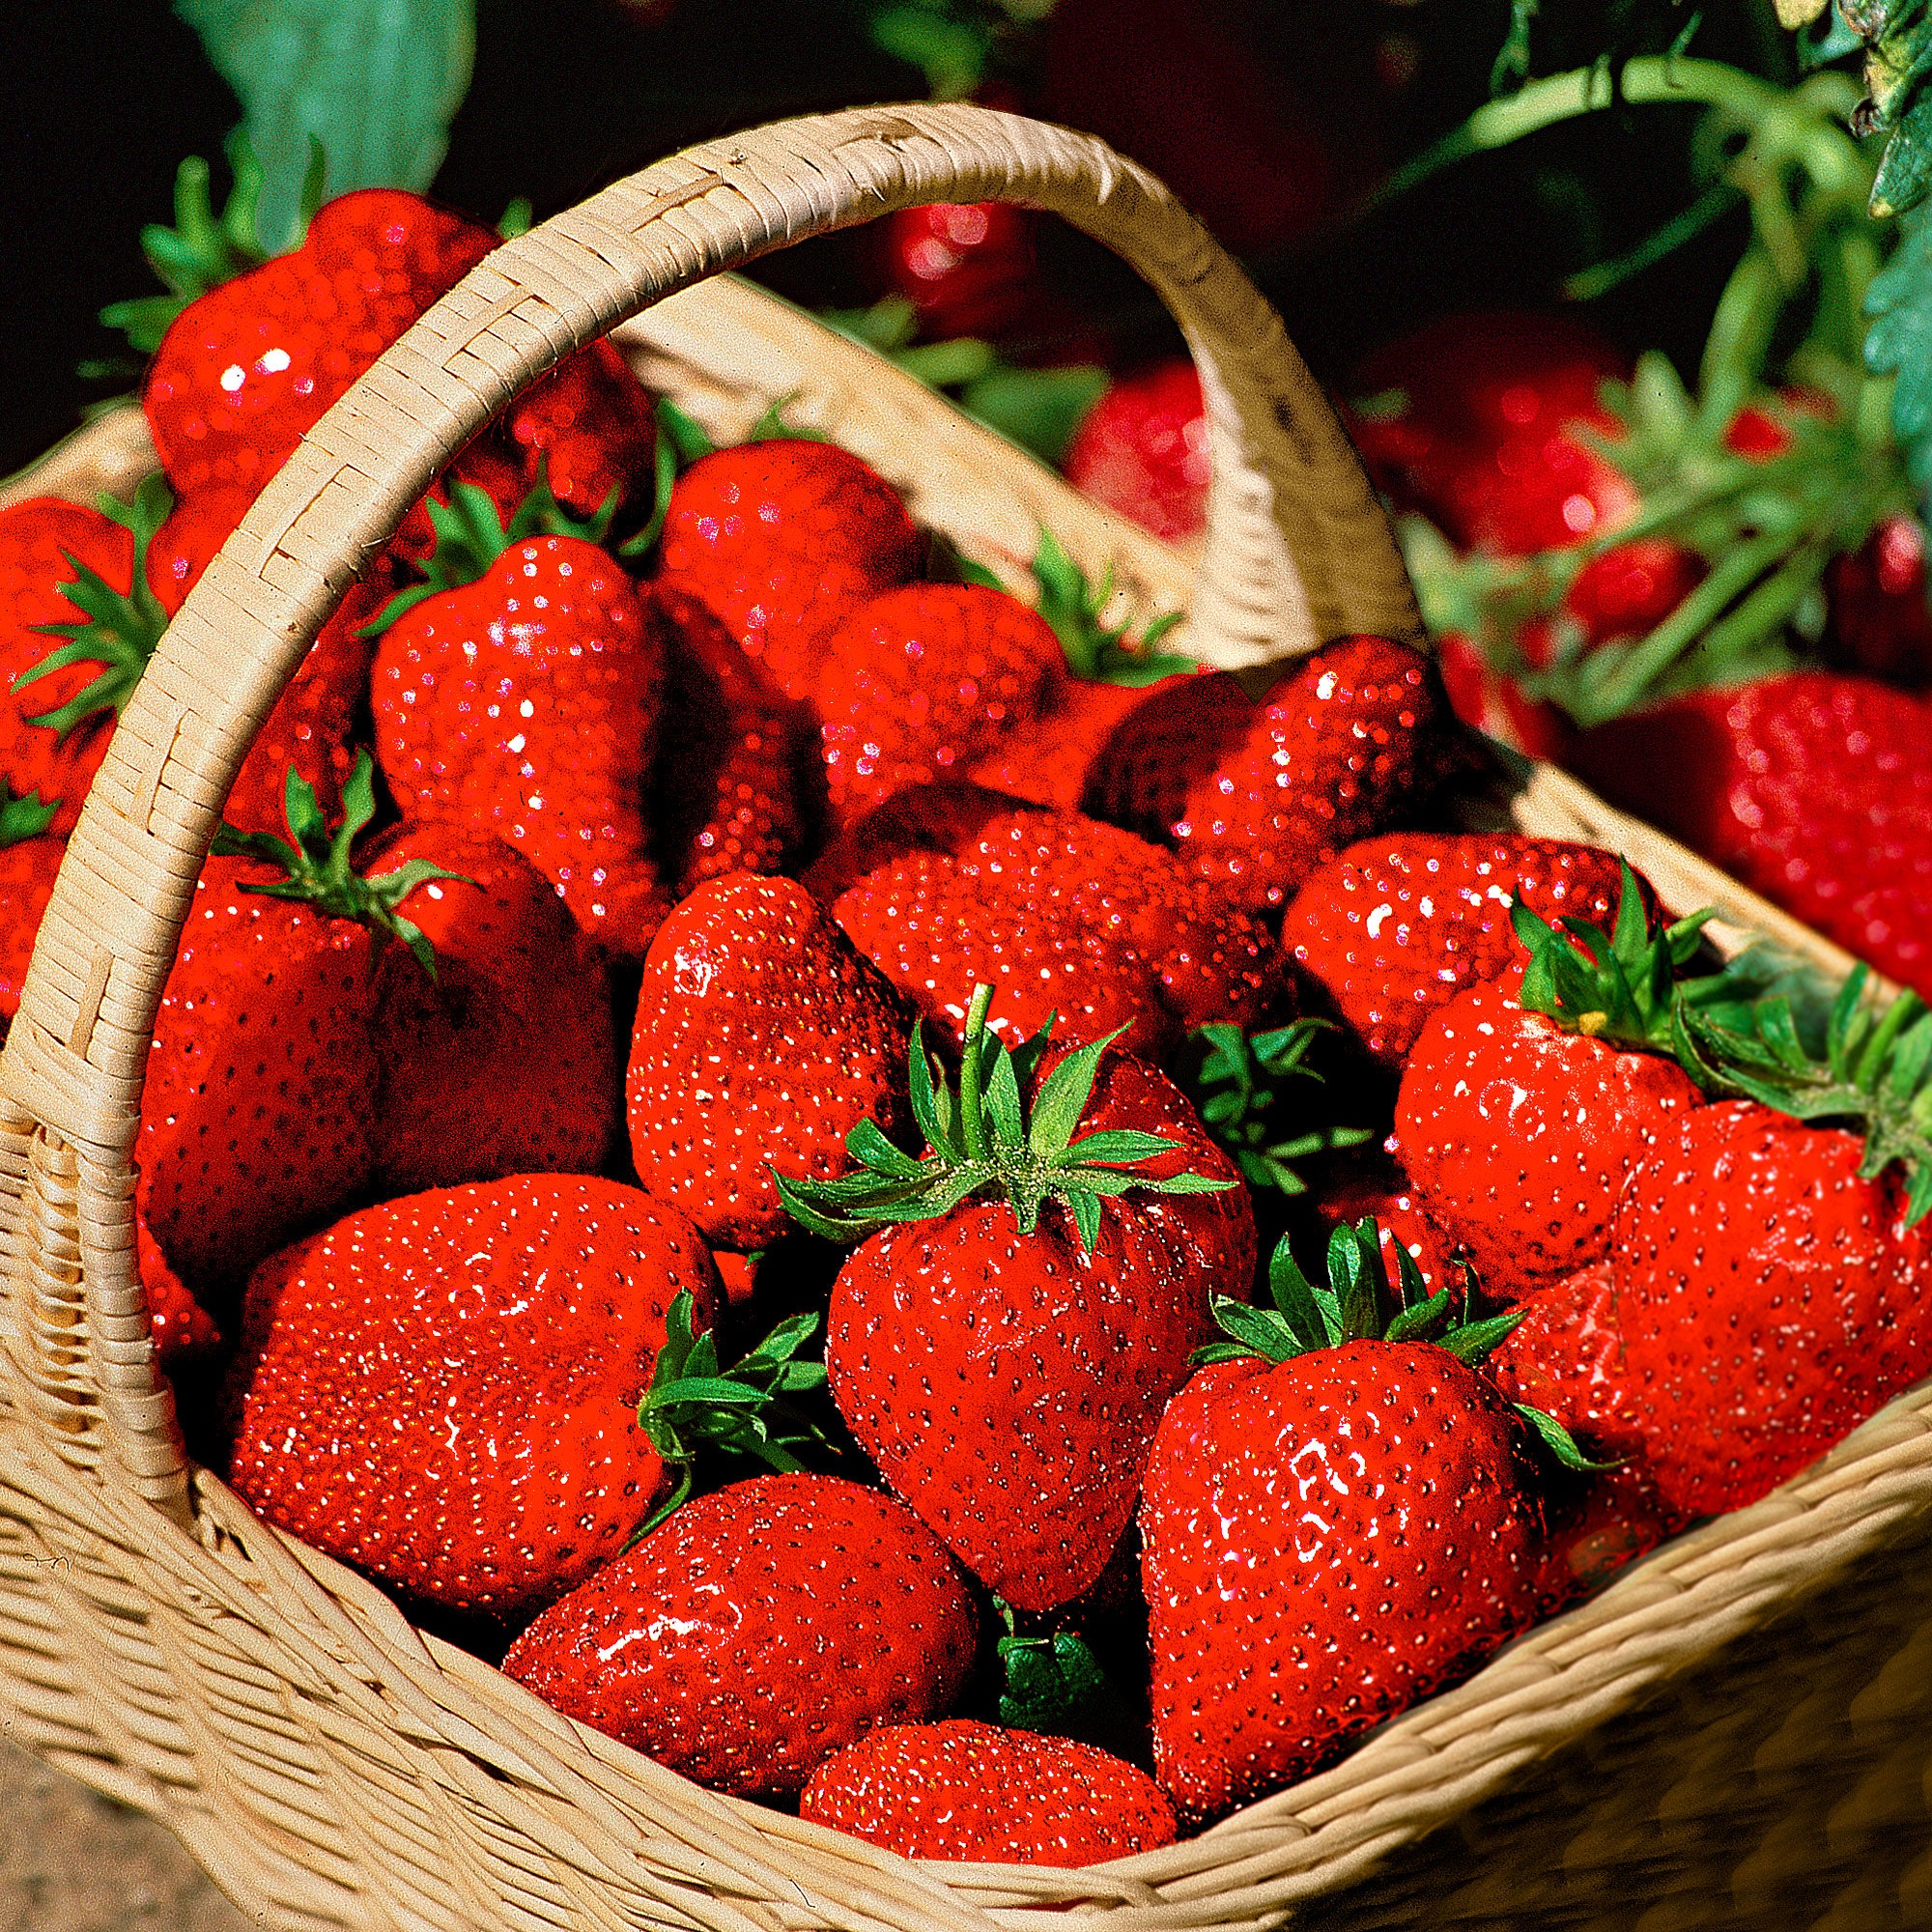 Buy Strawberry Fragaria x ananassa 'Ostara' Red | Bakker.com